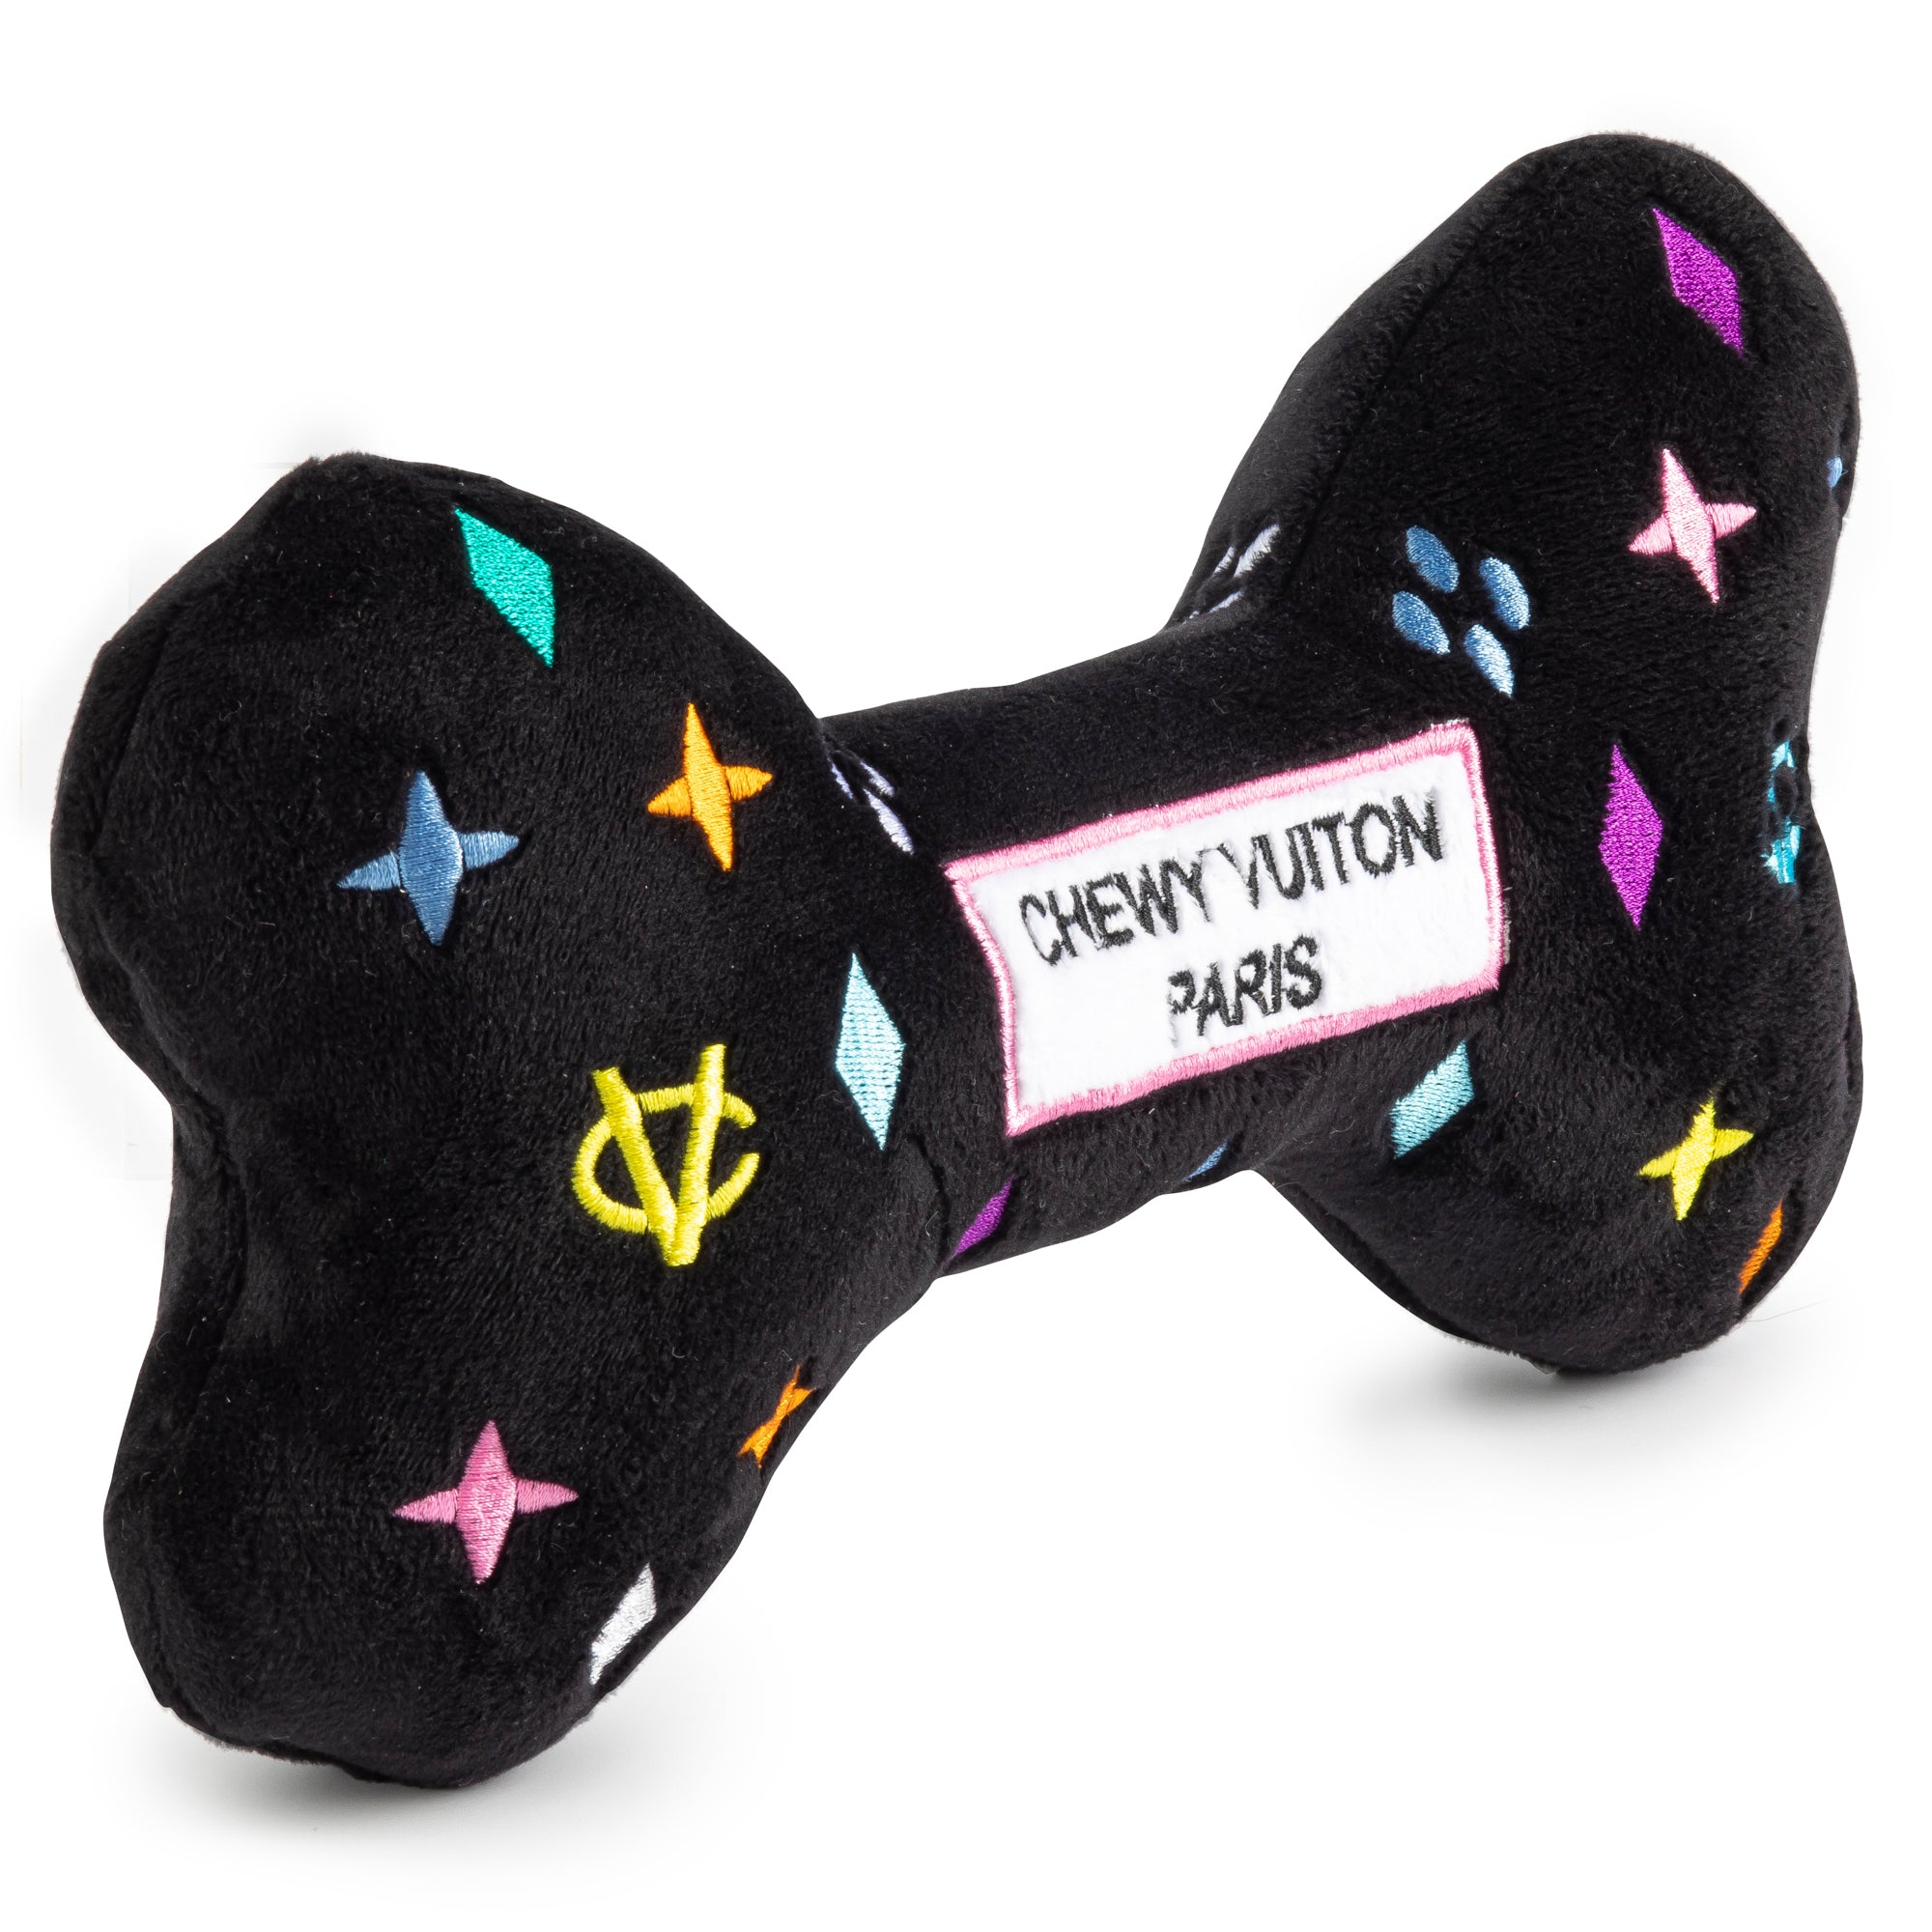 Black Monogram Chewy Vuiton Handbag Squeaker Dog Toy – Petit Pups